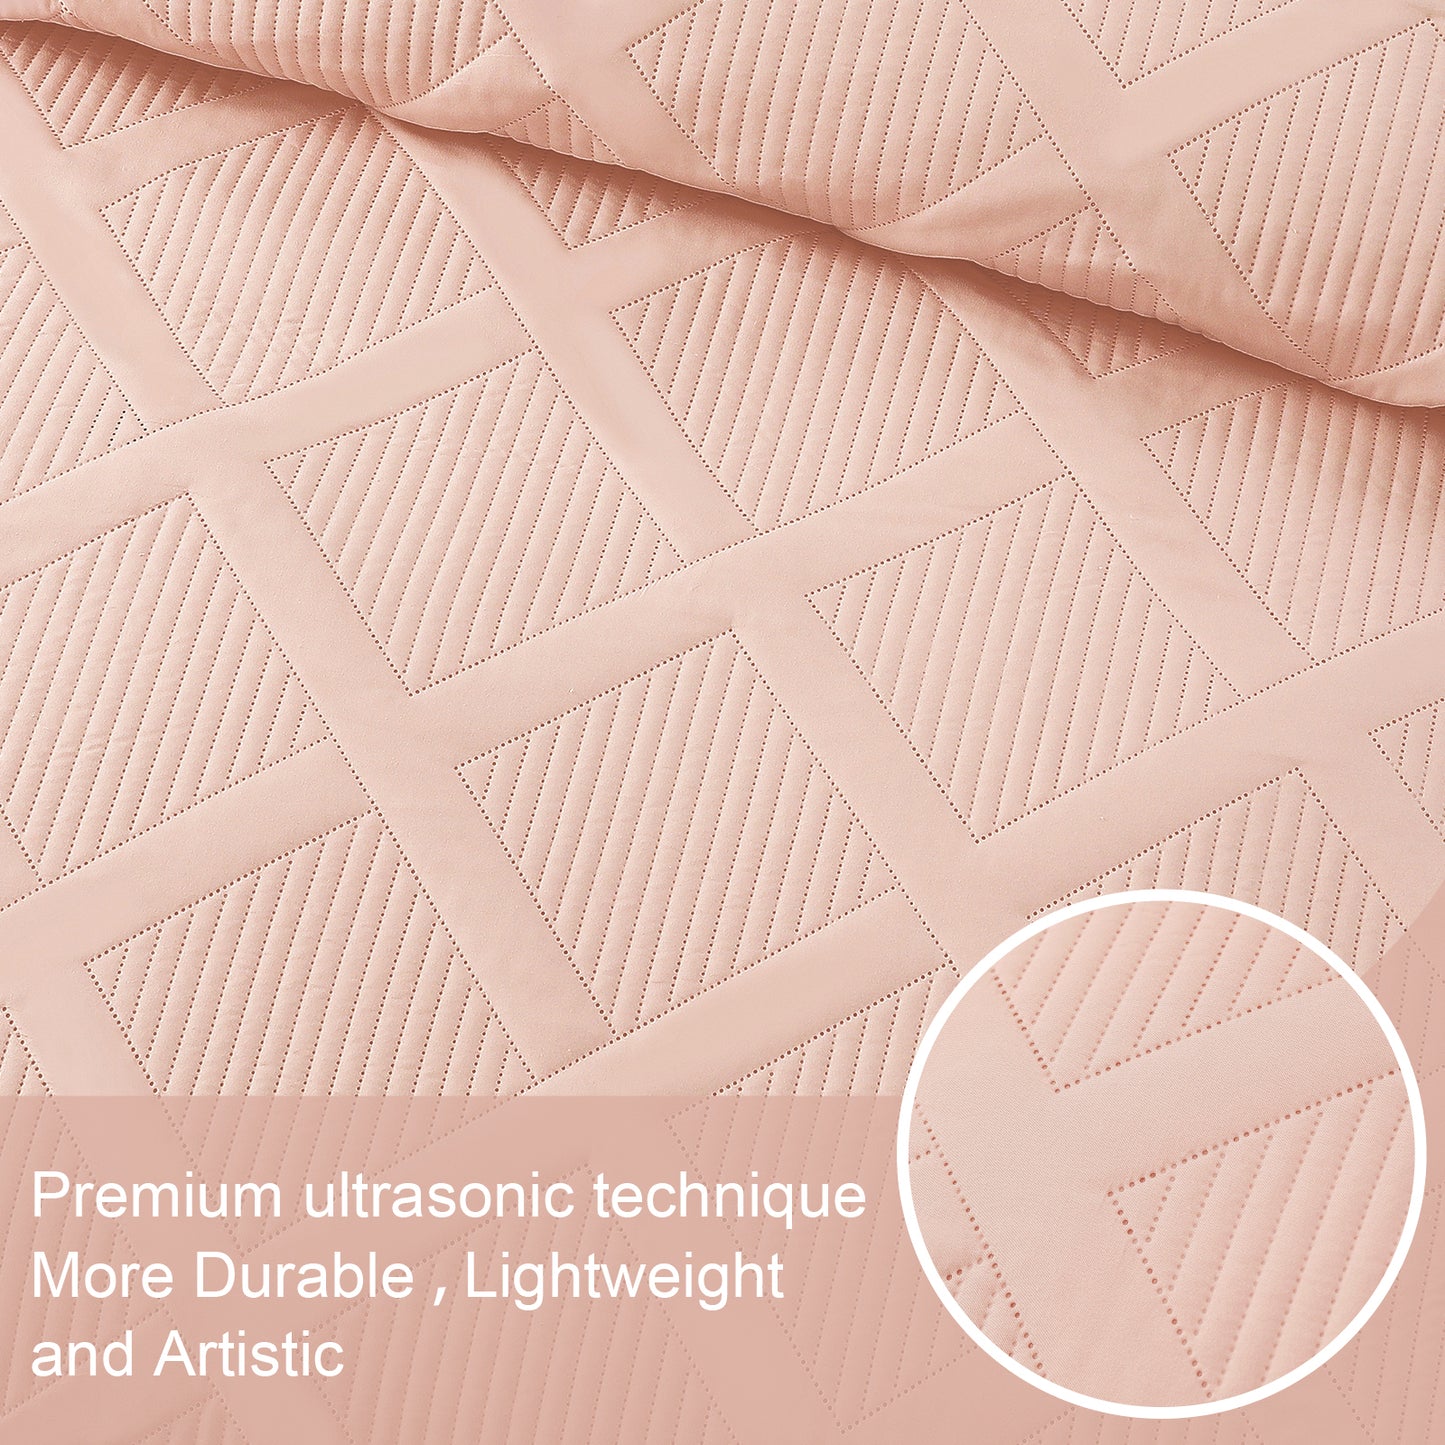 Exclusivo Mezcla Ultrasonic Twin/ Twin XL Quilt Set, Lightweight Bedspreads Modern Striped Coverlet with 1 Pillow Sham, Blush Pink